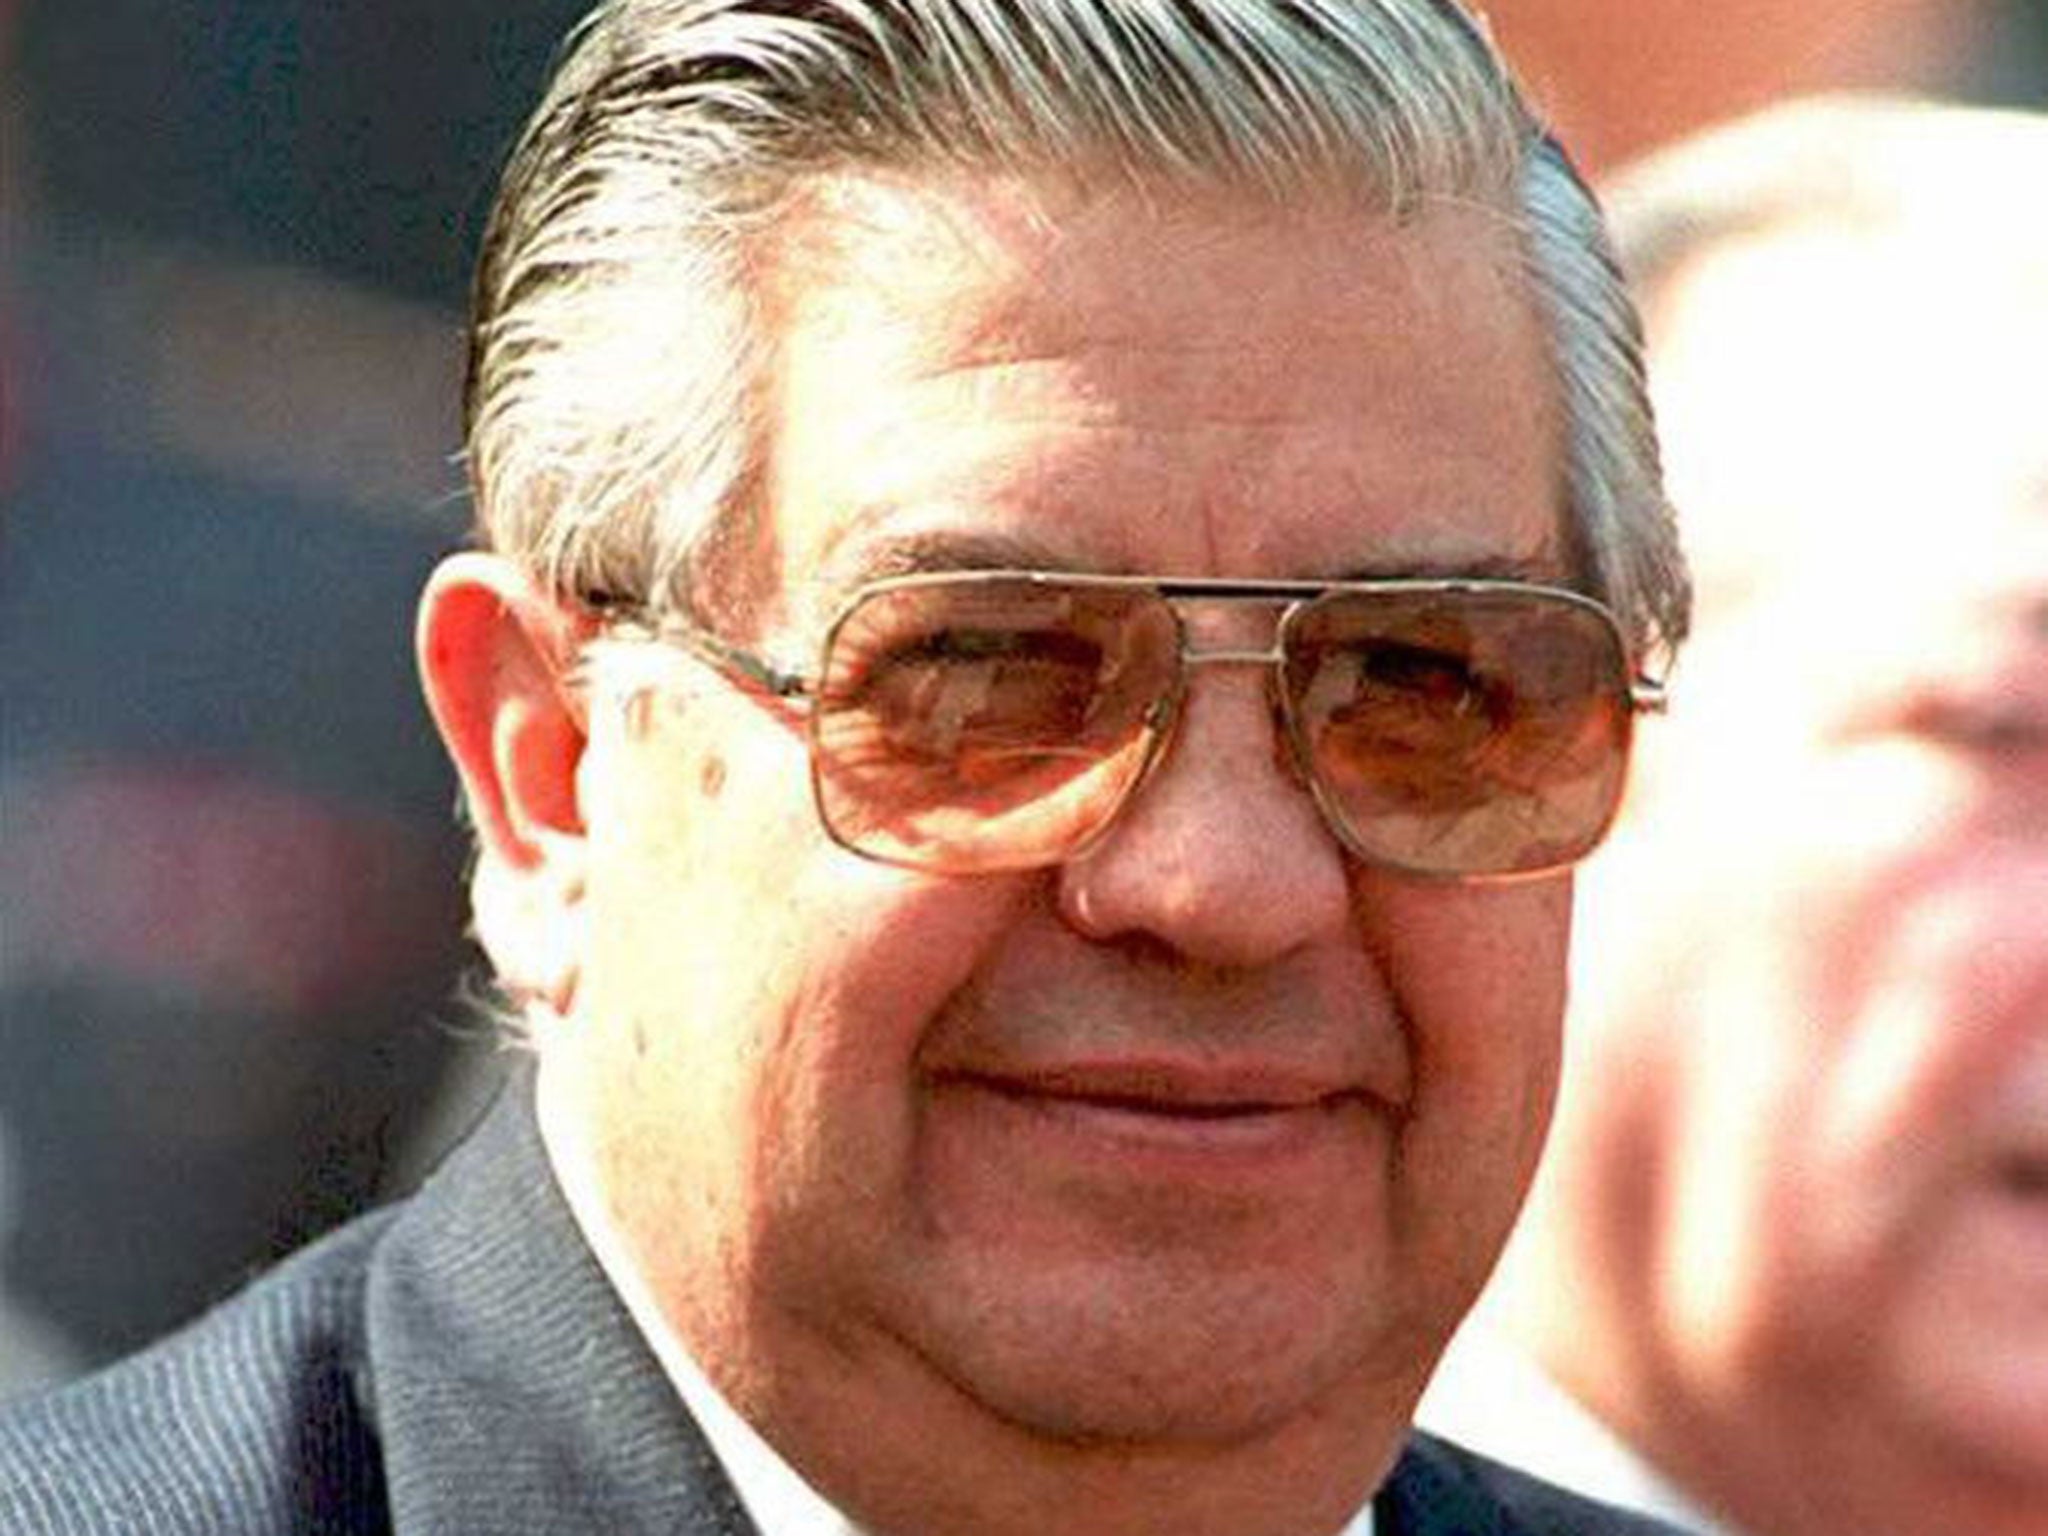 More feared than Pinochet: Contreras in 1992